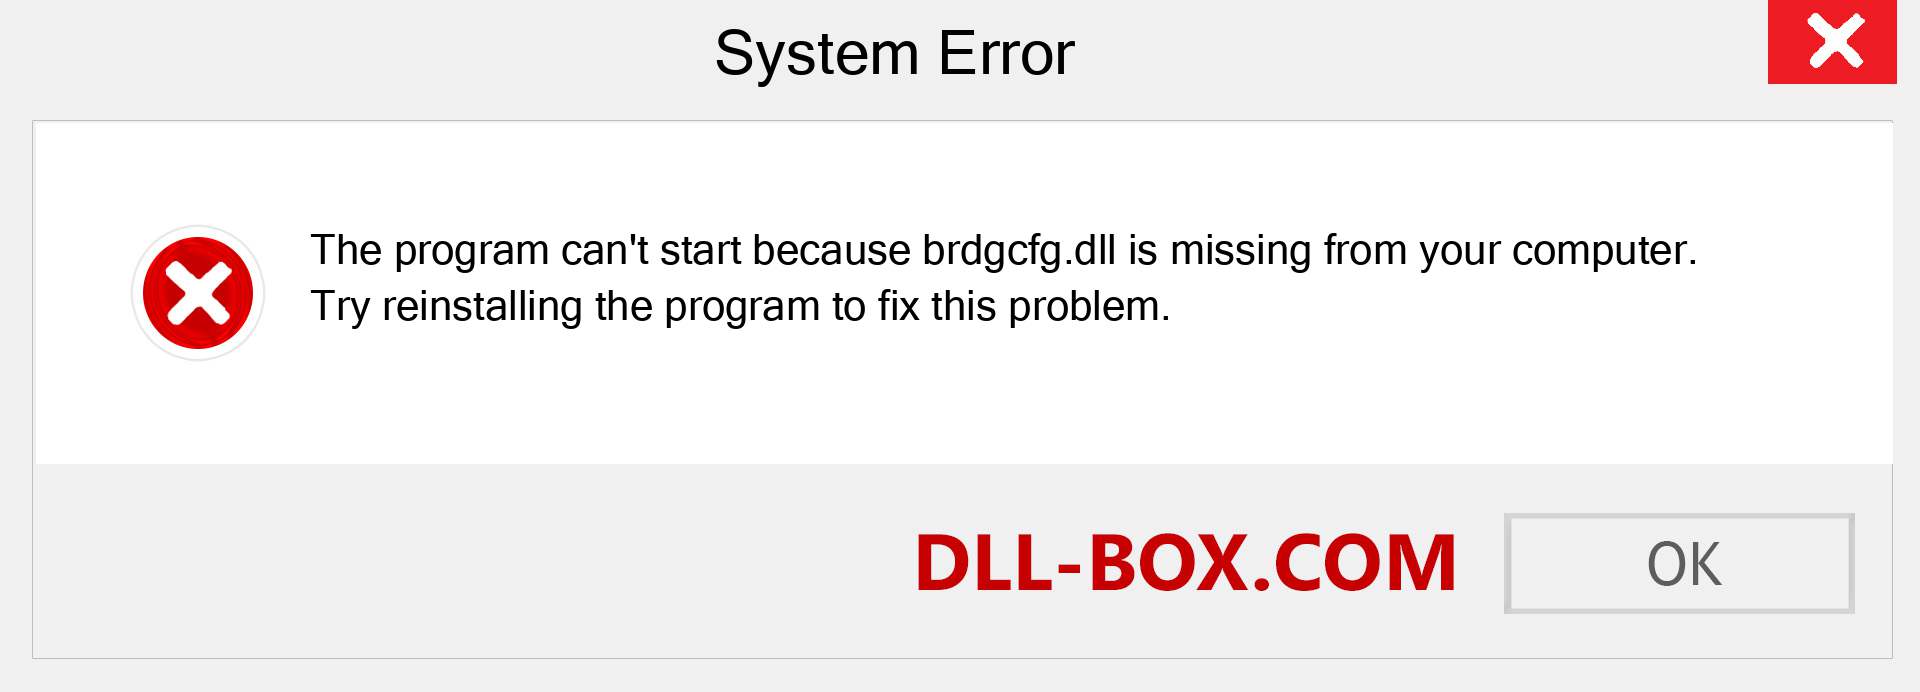  brdgcfg.dll file is missing?. Download for Windows 7, 8, 10 - Fix  brdgcfg dll Missing Error on Windows, photos, images